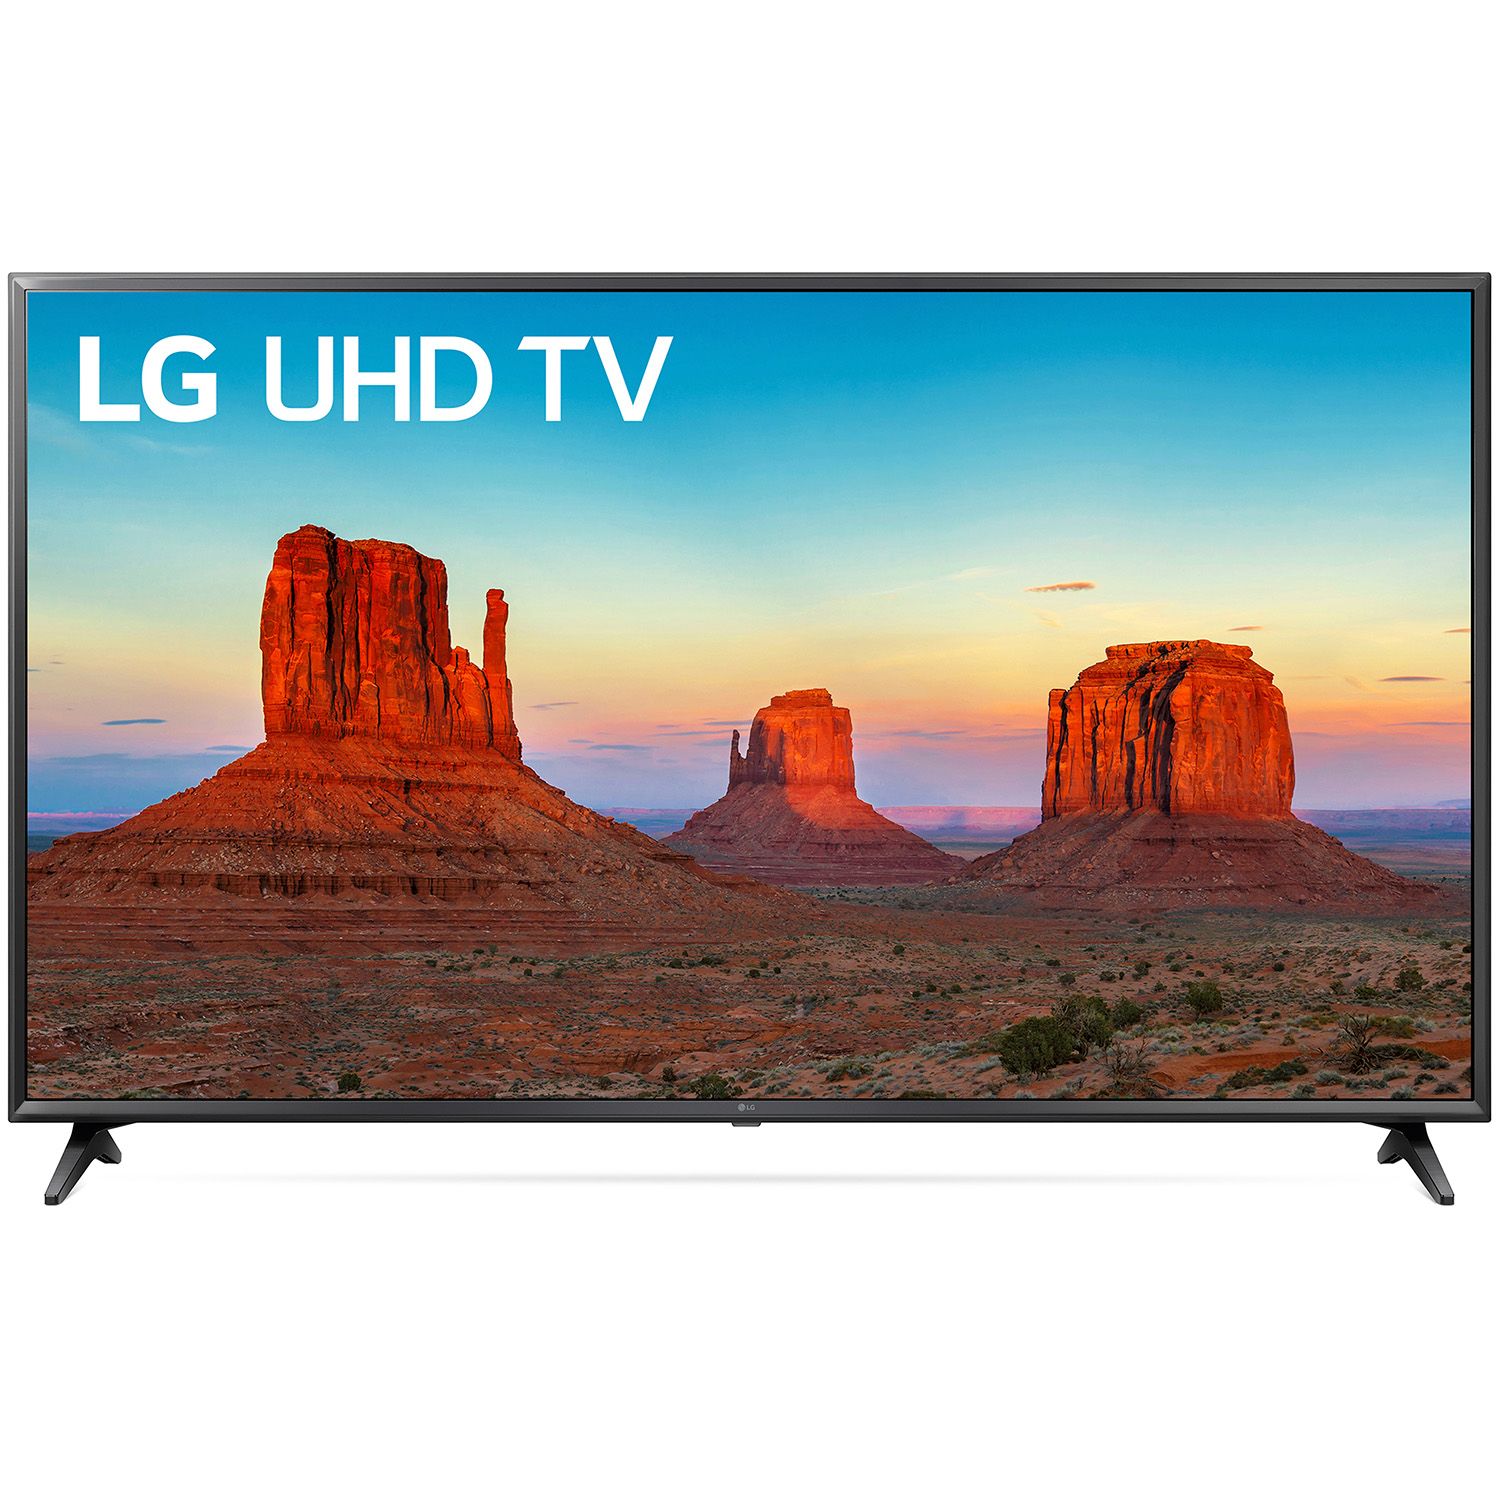 LG 55UK6090PUA 55″ 4K HDR Smart LED UHD TV with webOS